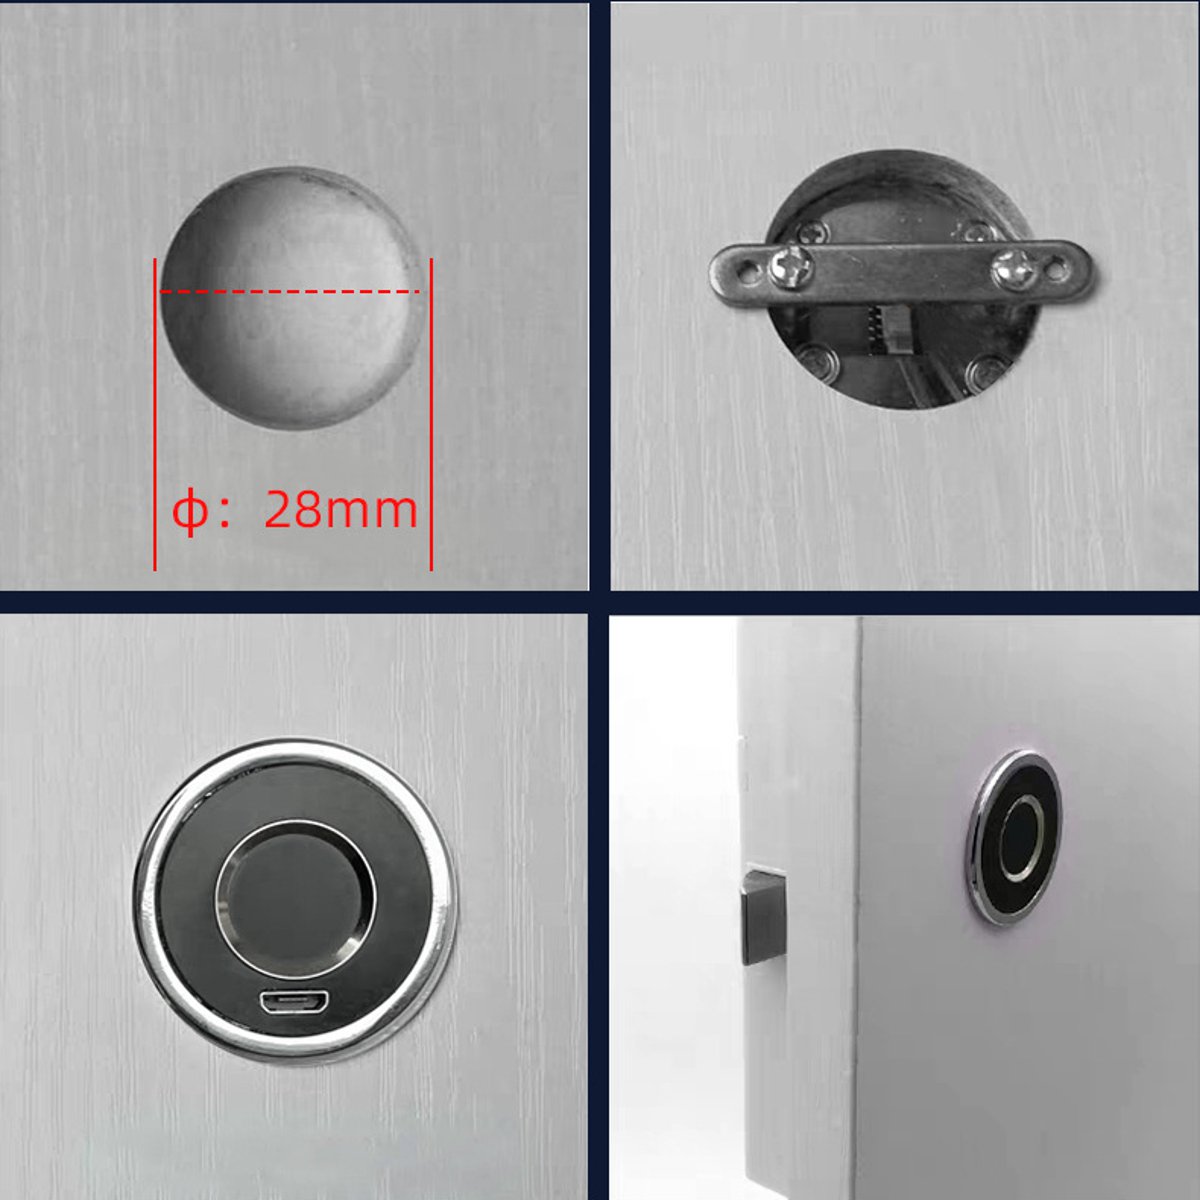 Fingerprint-Cabinet-Door-Drawer-Lock-Battery-Power-Home-Office-Safety-Security-1623455